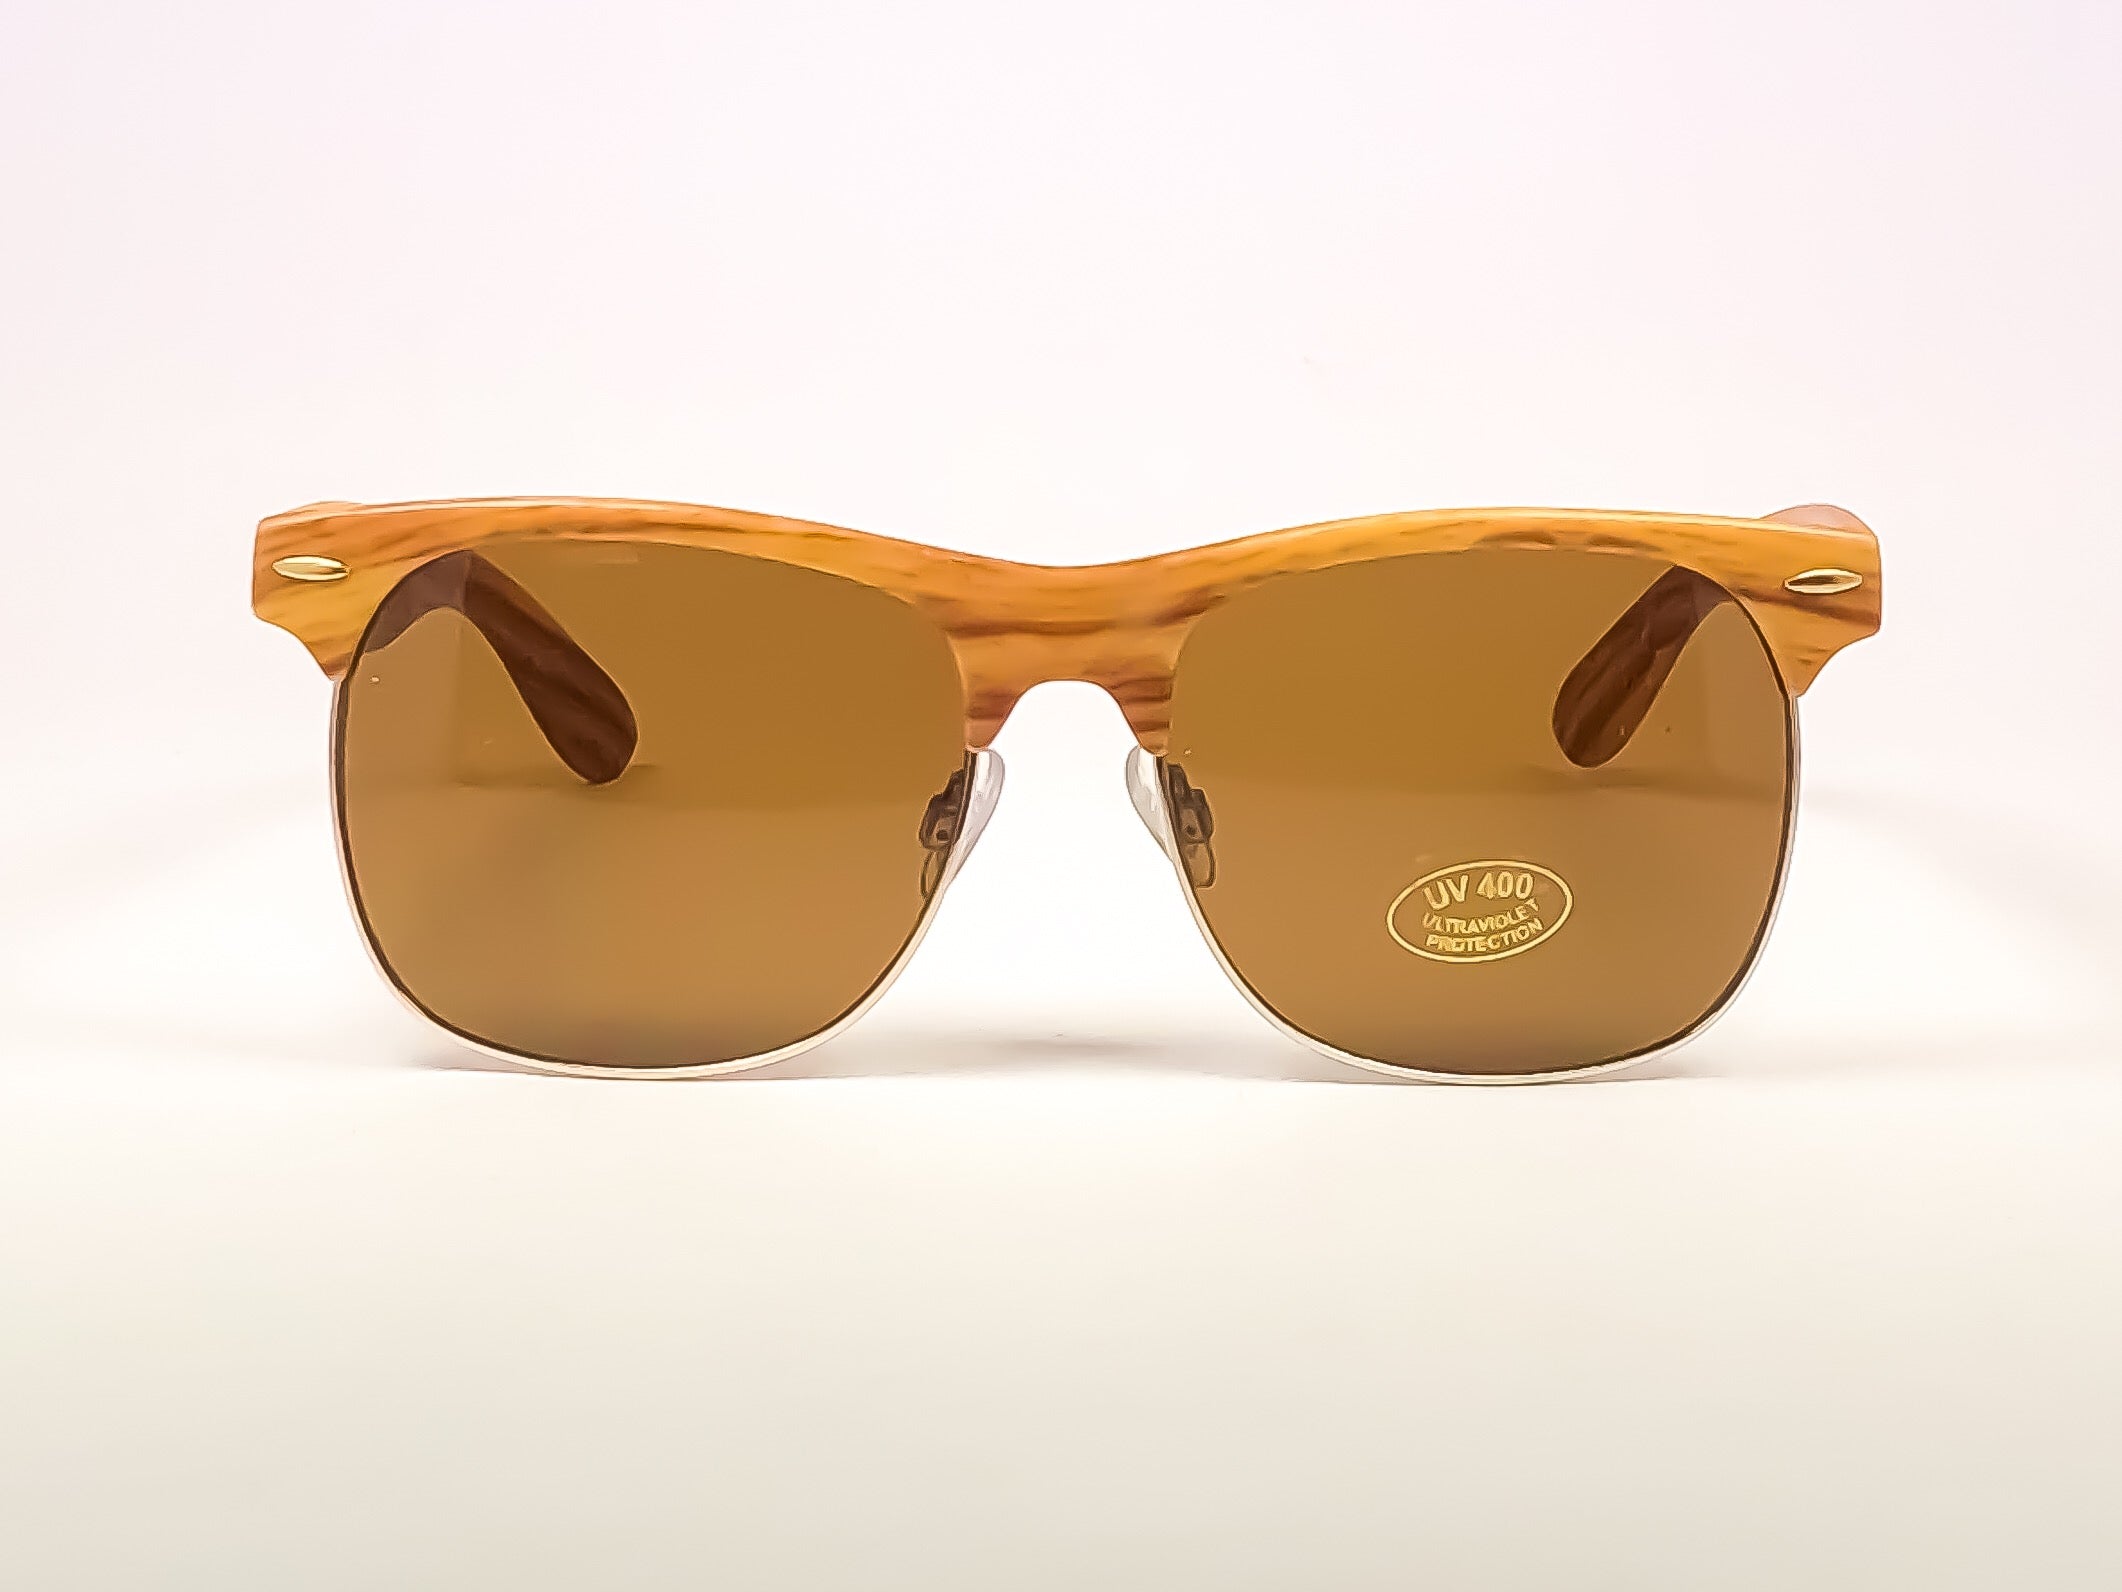 SB-7001 - Half Frame Wood Pattern Sunglasses